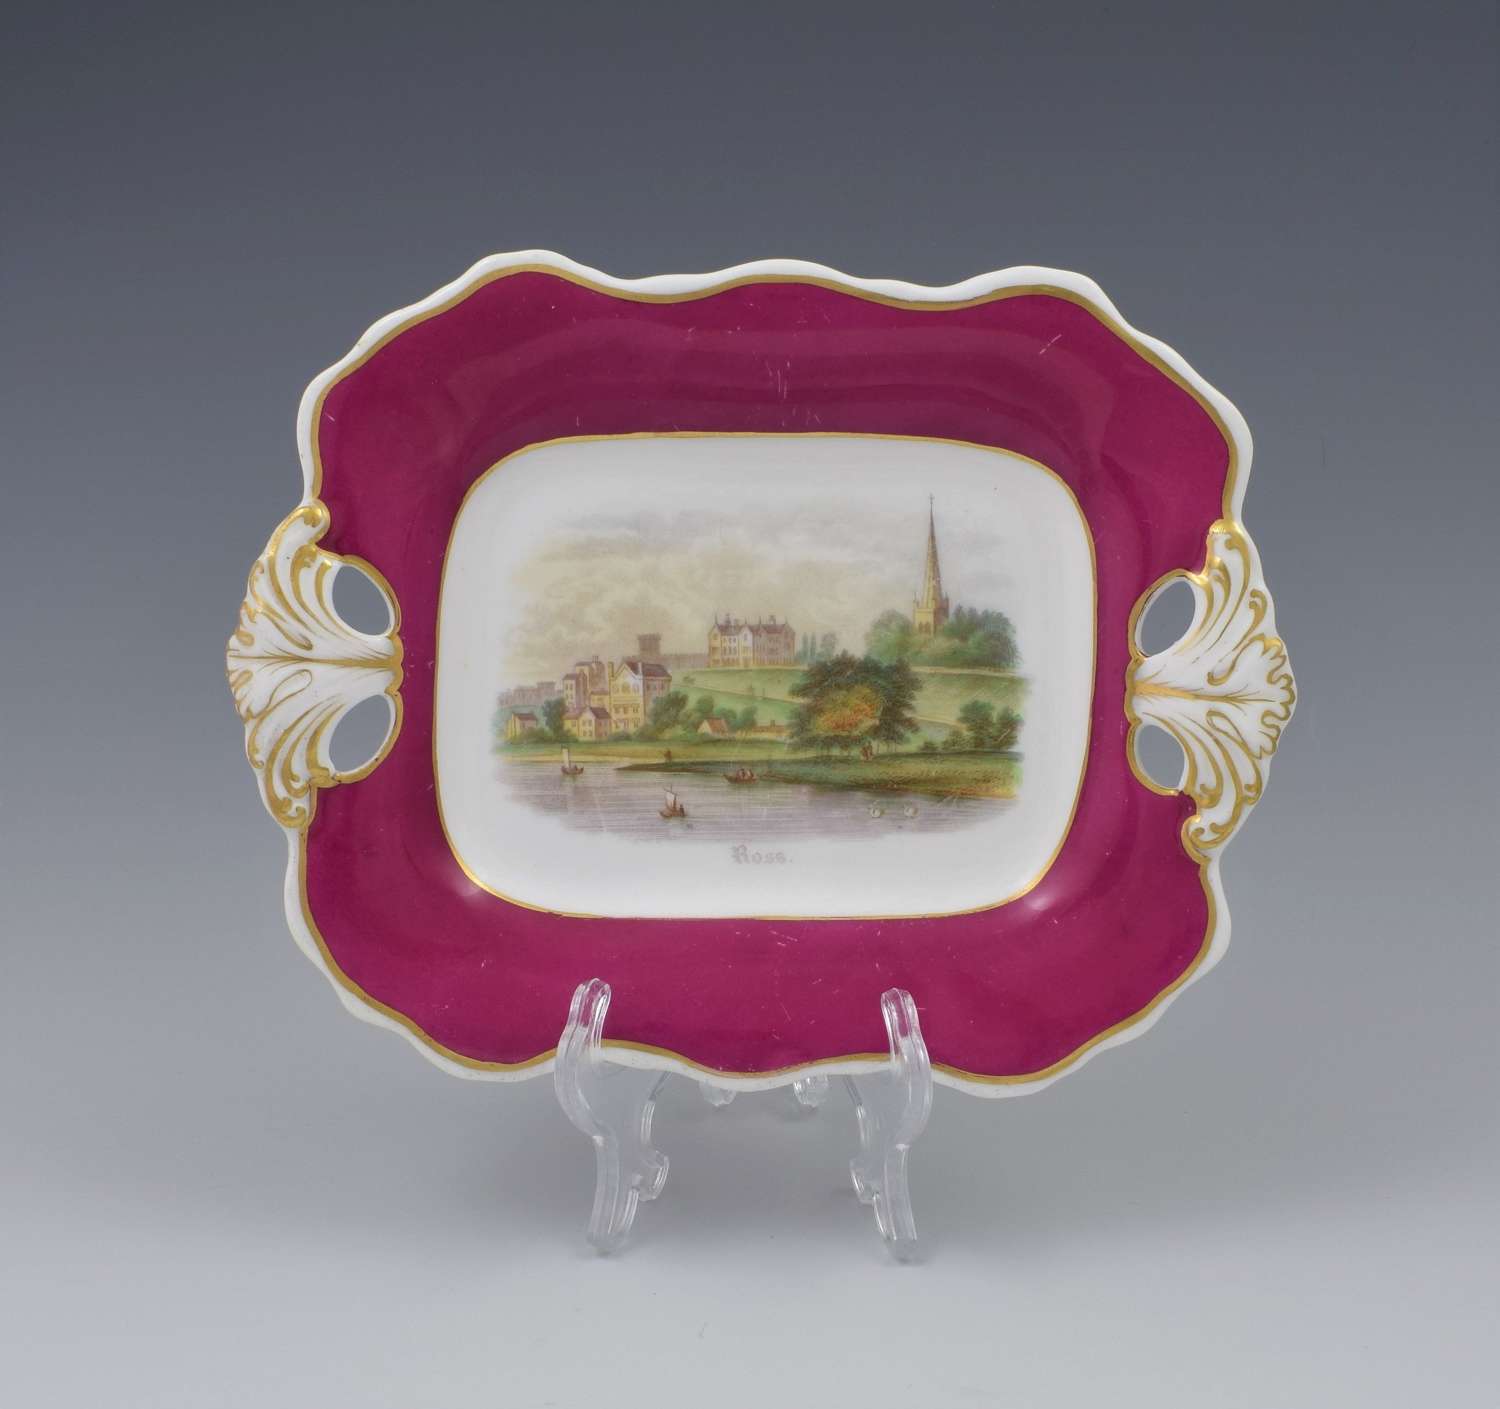 Antique Davenport Porcelain Dessert Dish View Of Ross-On-Wye c.1840